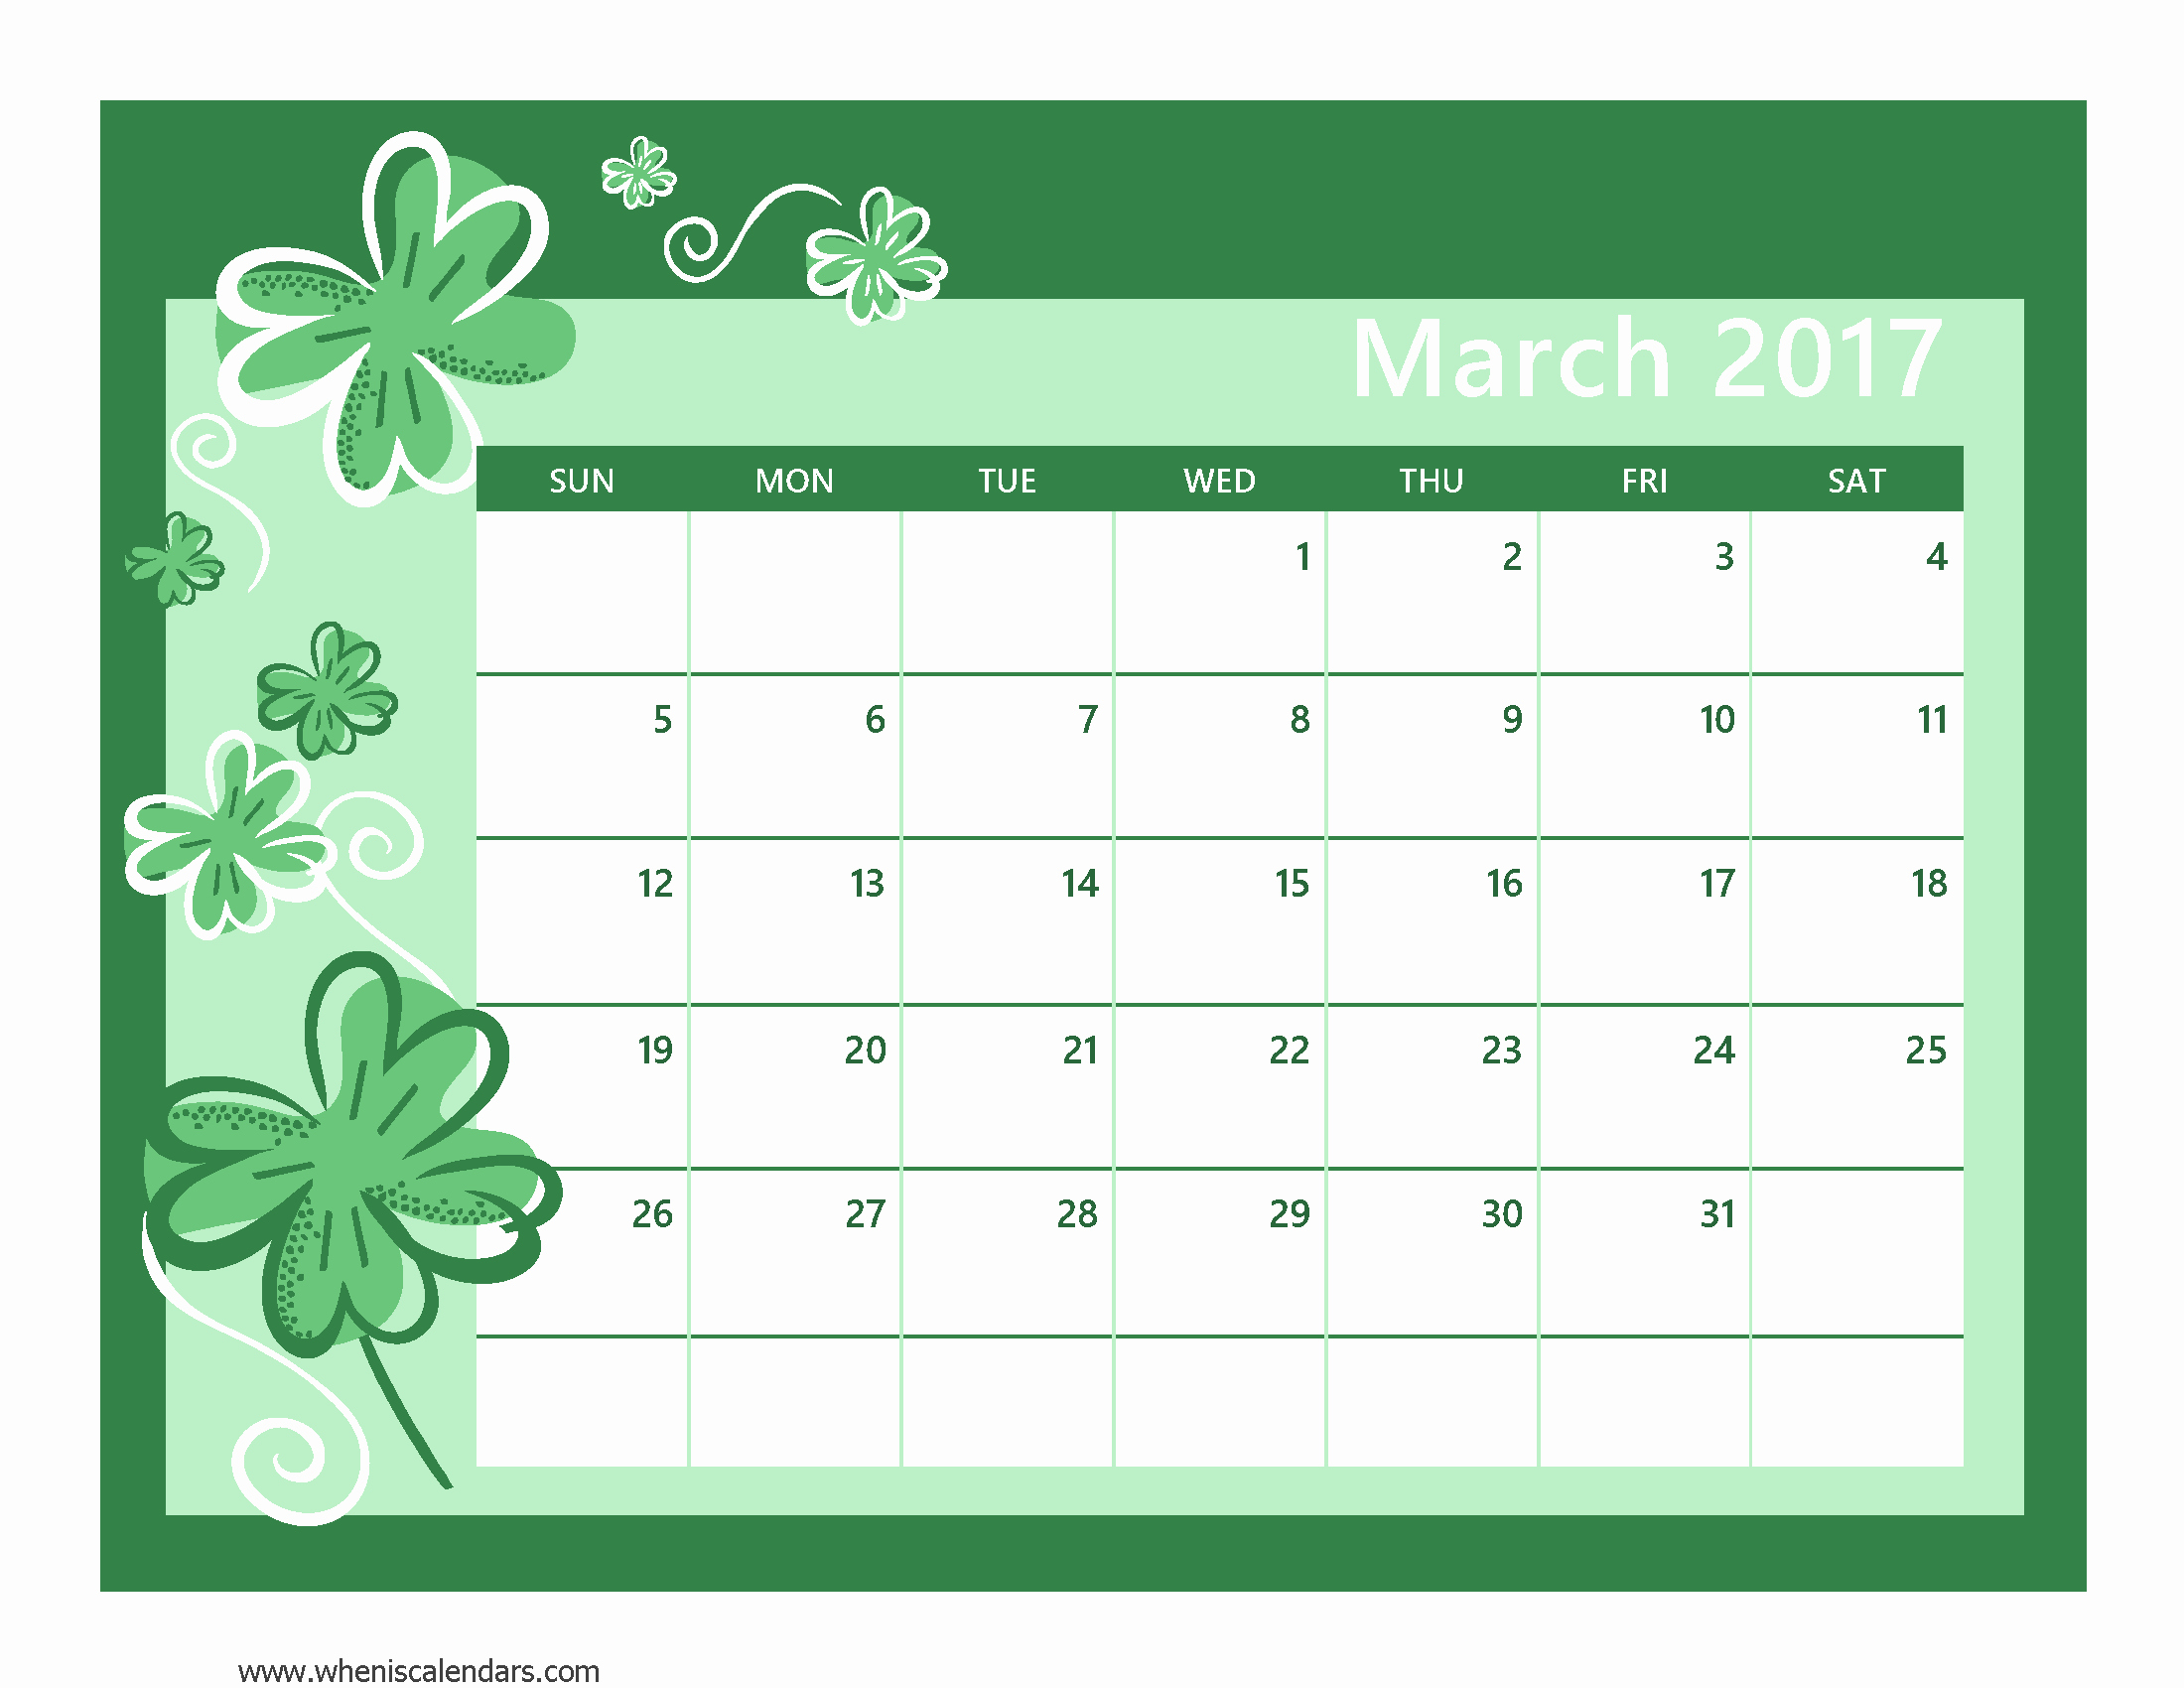 Calendar 2017 Template with Holidays Inspirational March 2017 Calendar Printable with Holidays